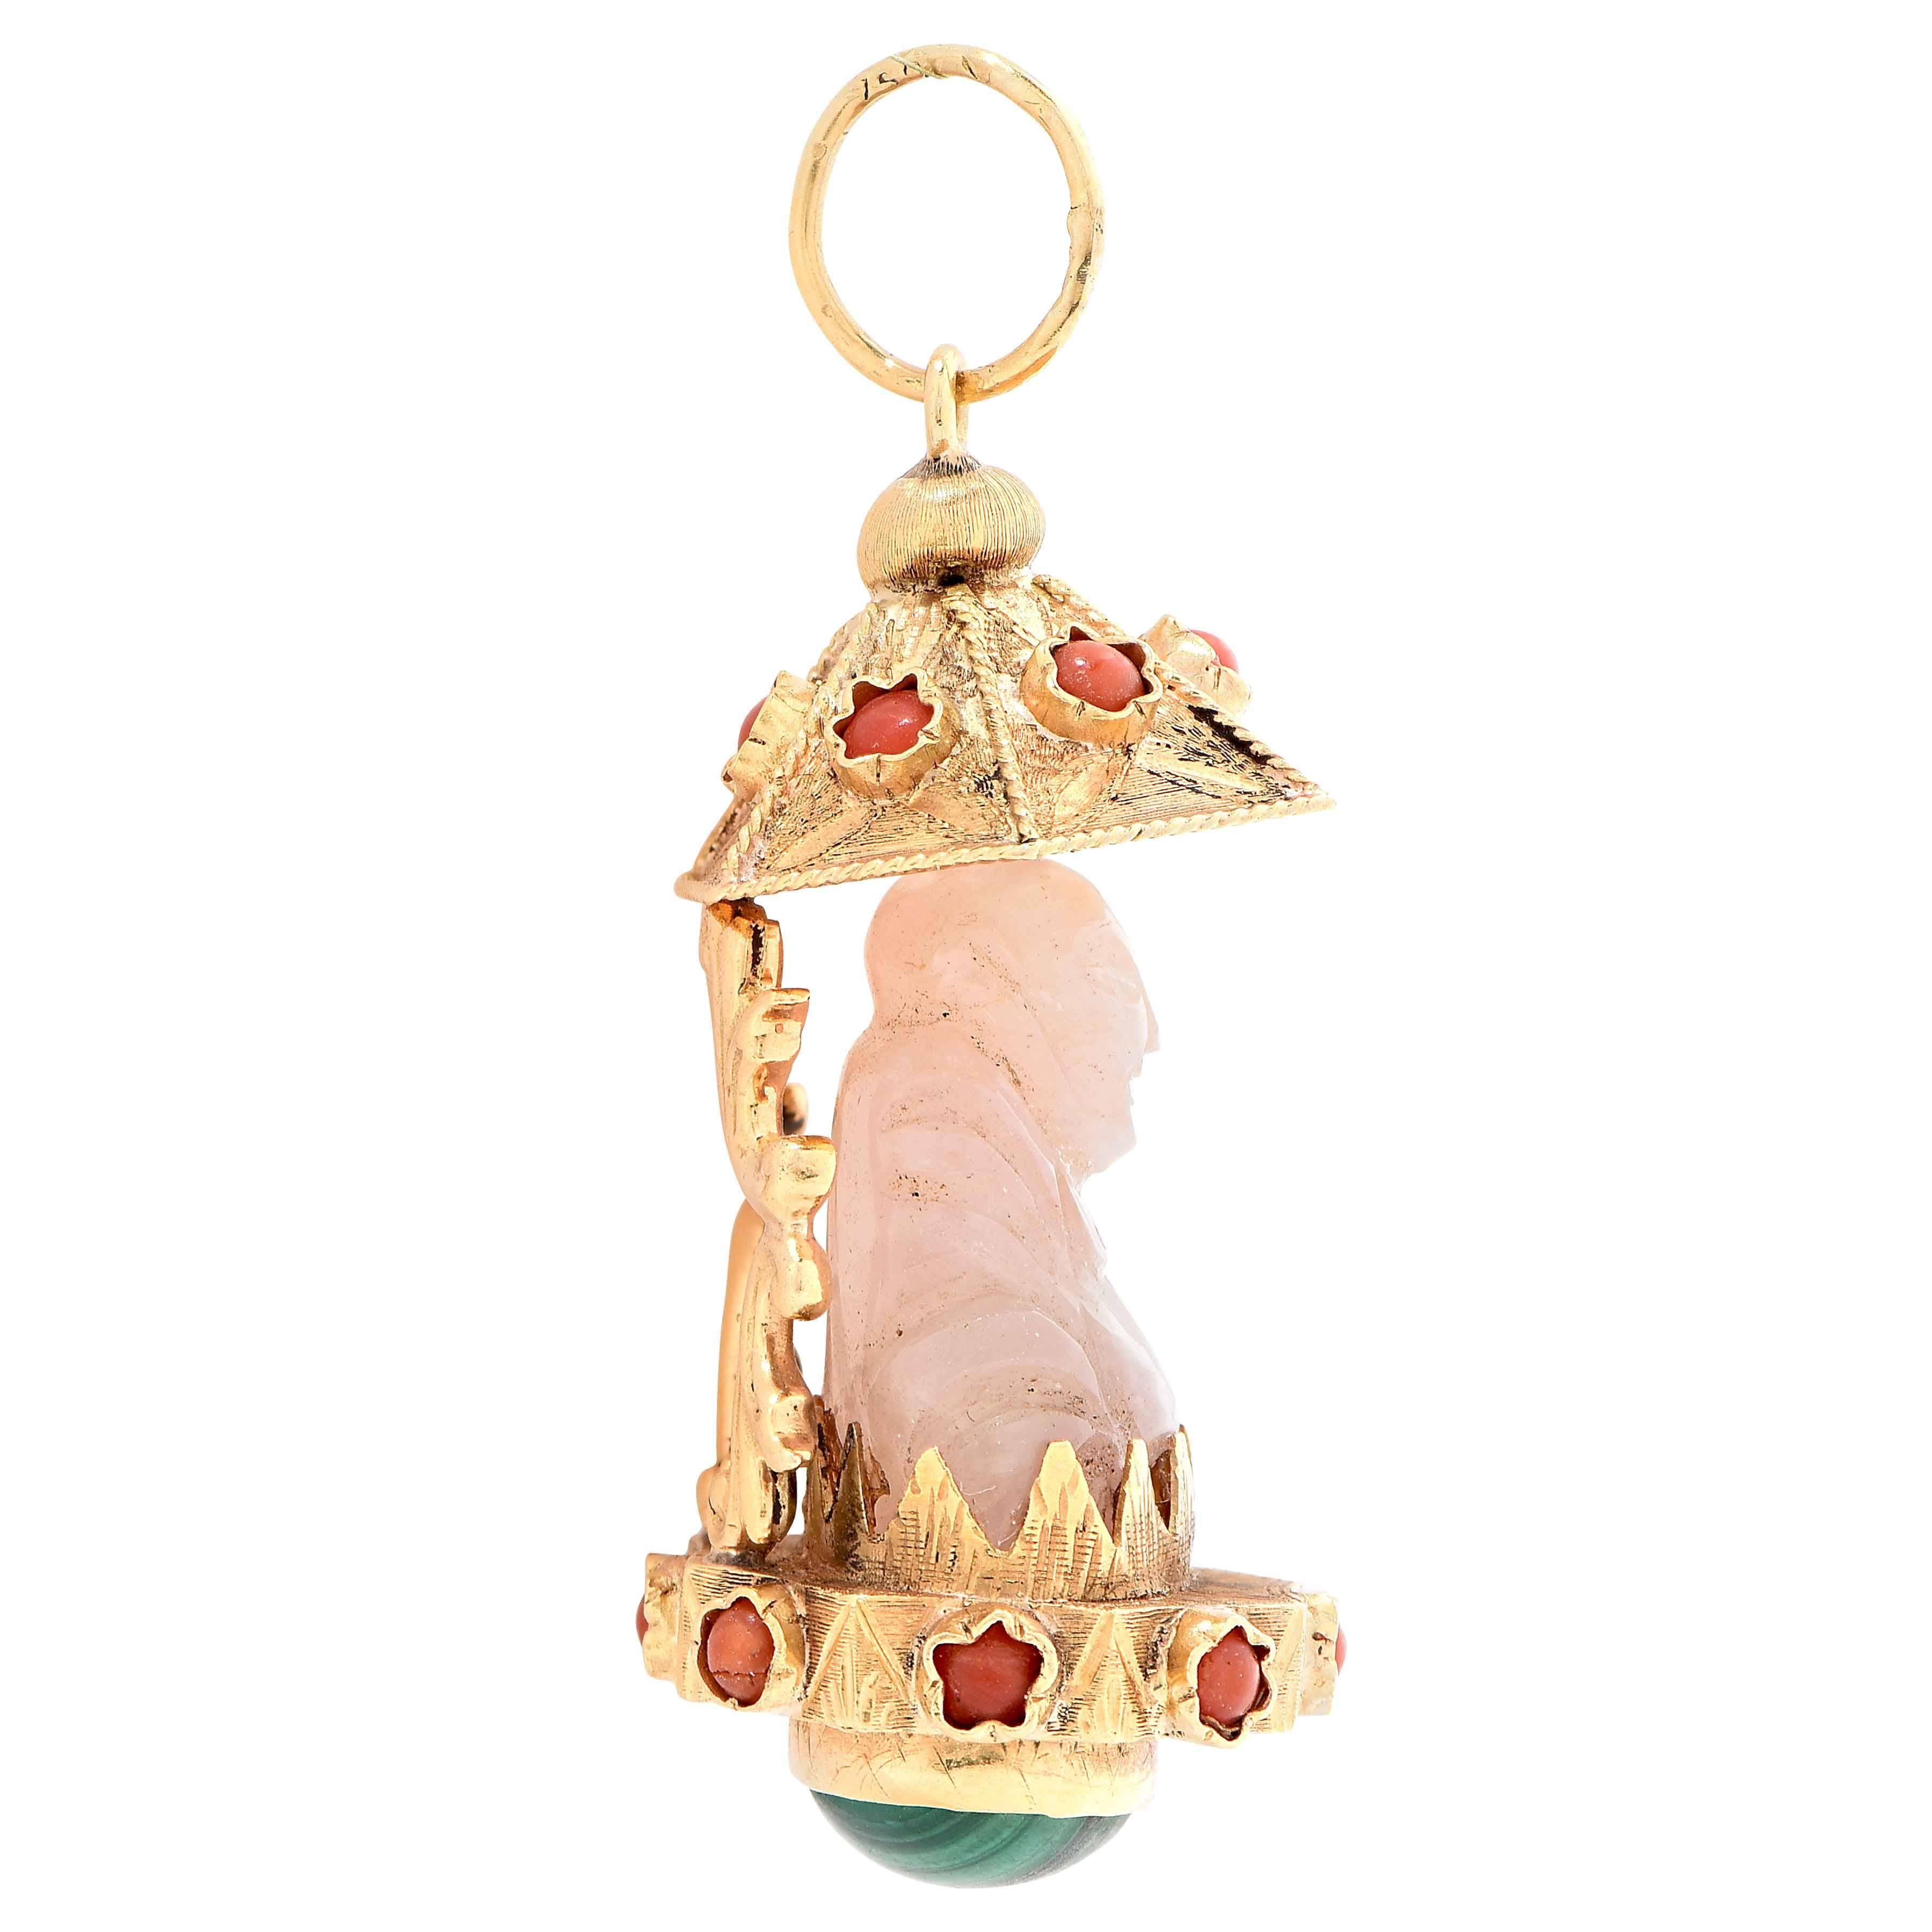 Pink jade Buddha pendant with coral beads and malachite cabochon bottom.